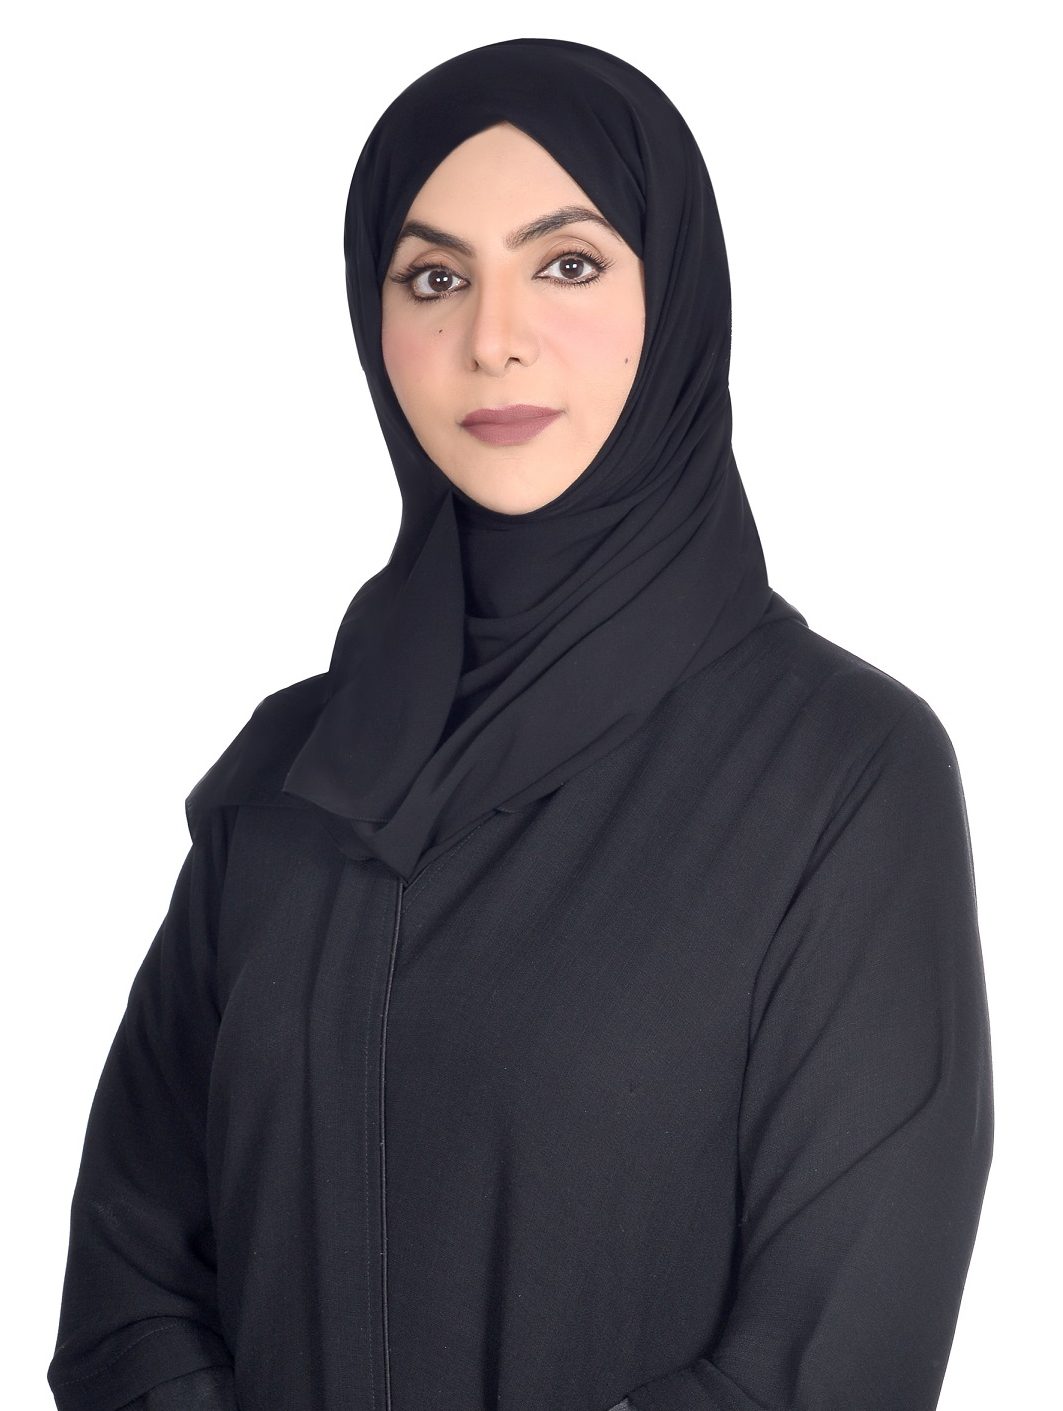 Dr. Fareeda Mubarak Al Ameri